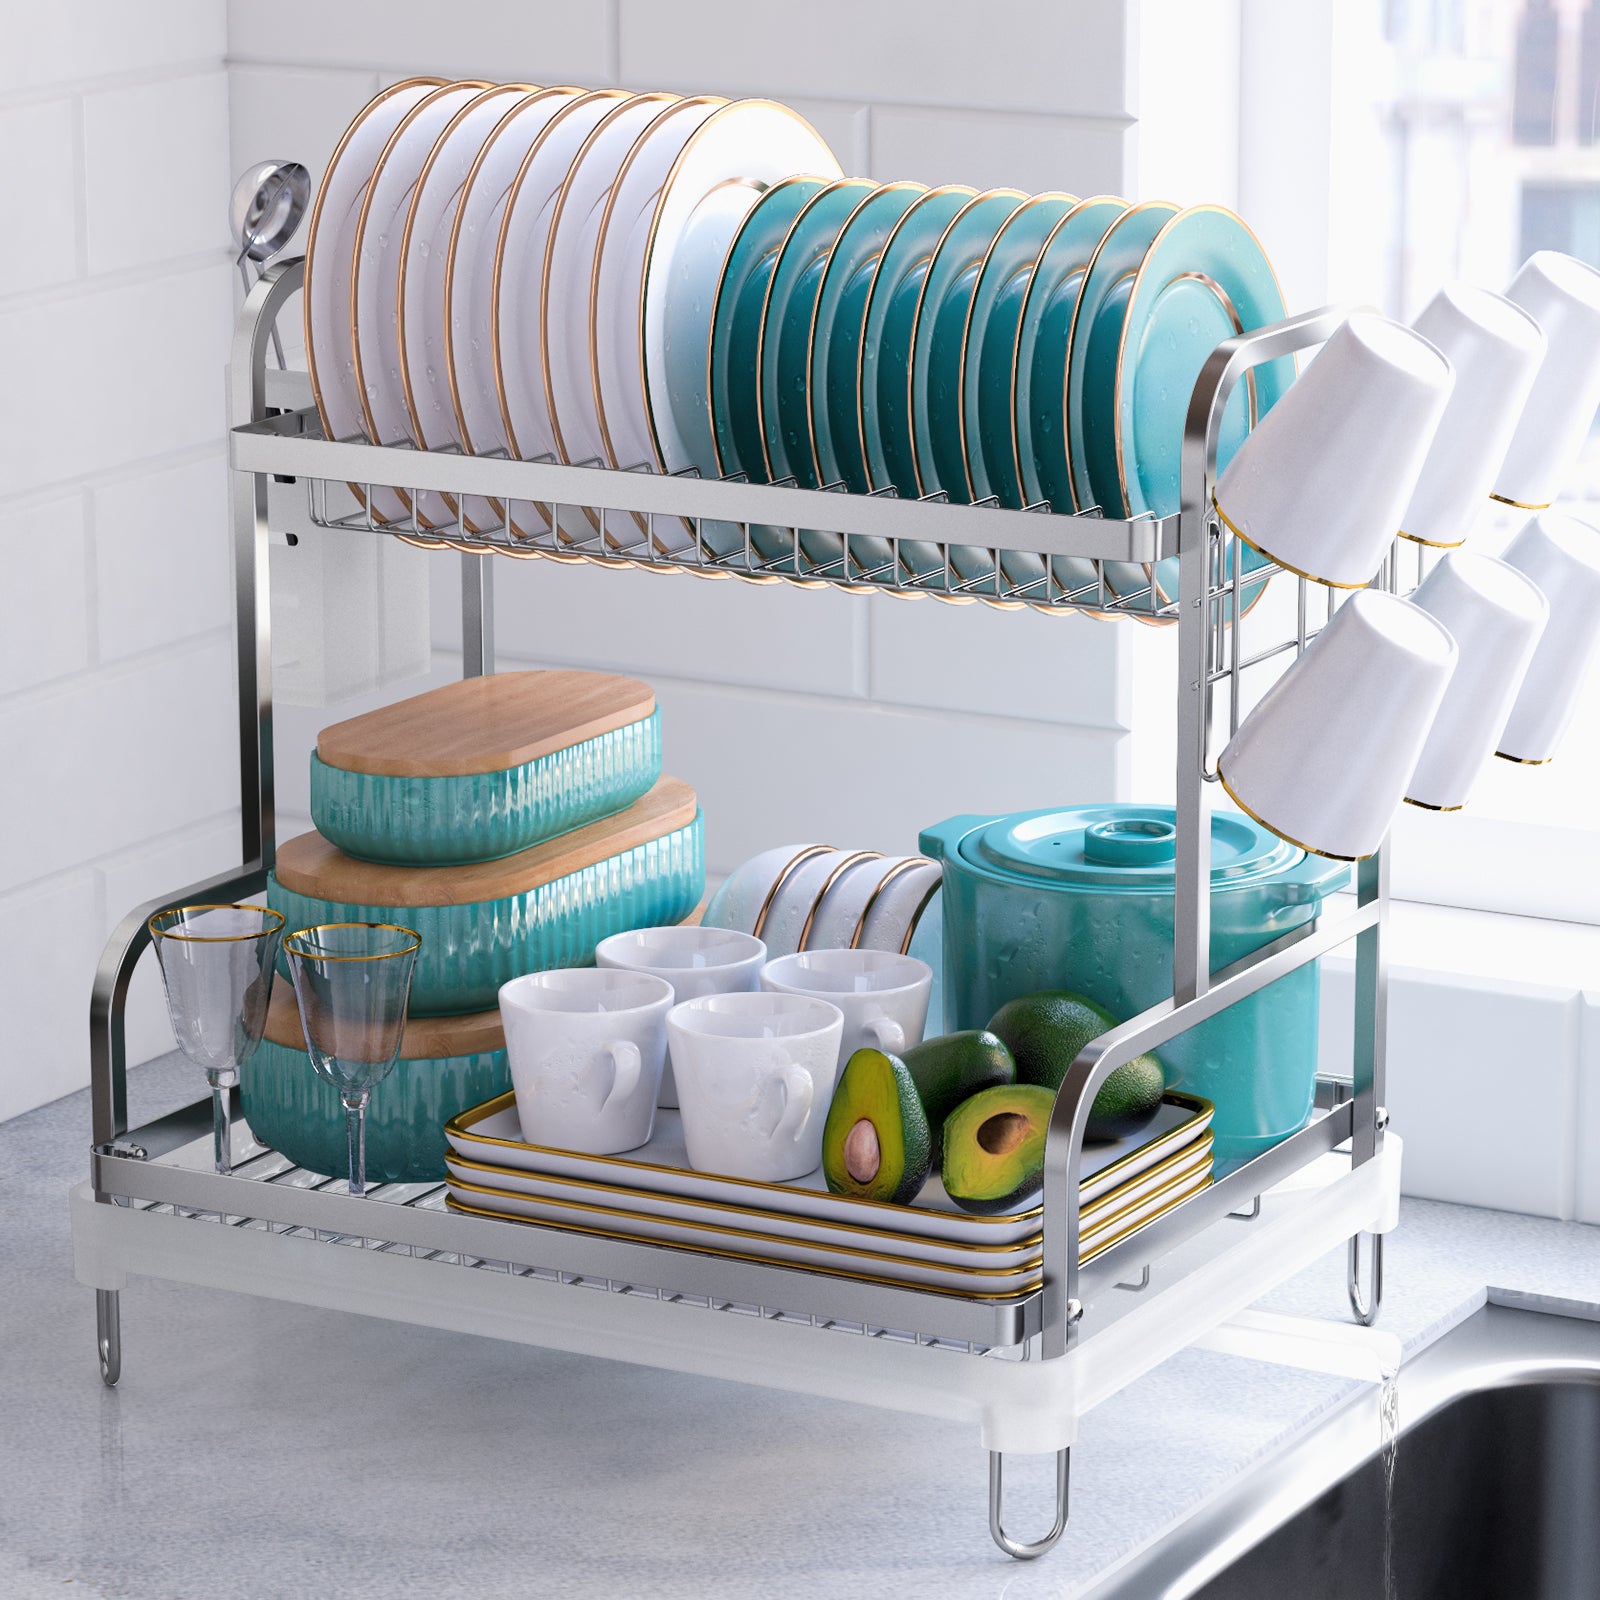 Kitsure Dish Drying Rack - Deals Finders